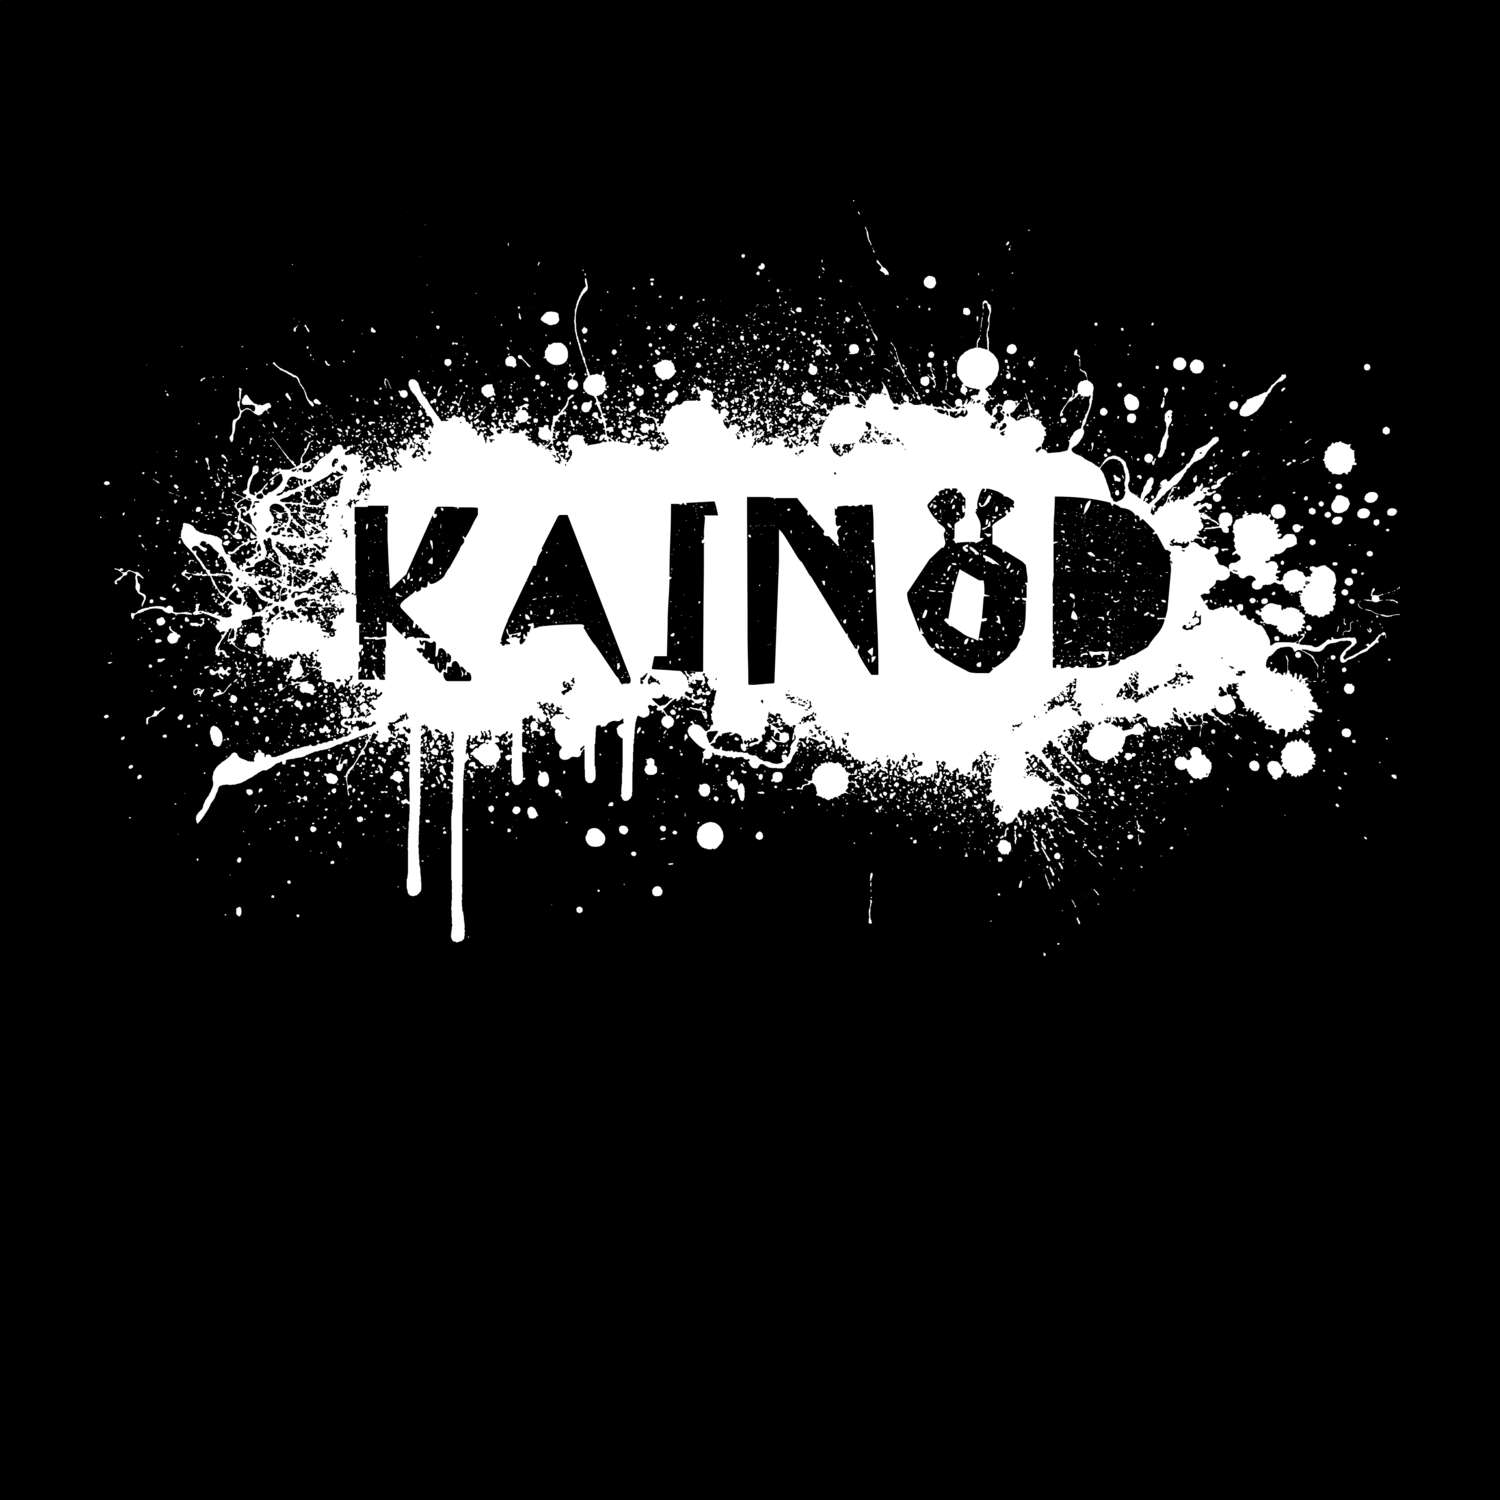 Kainöd T-Shirt »Paint Splash Punk«